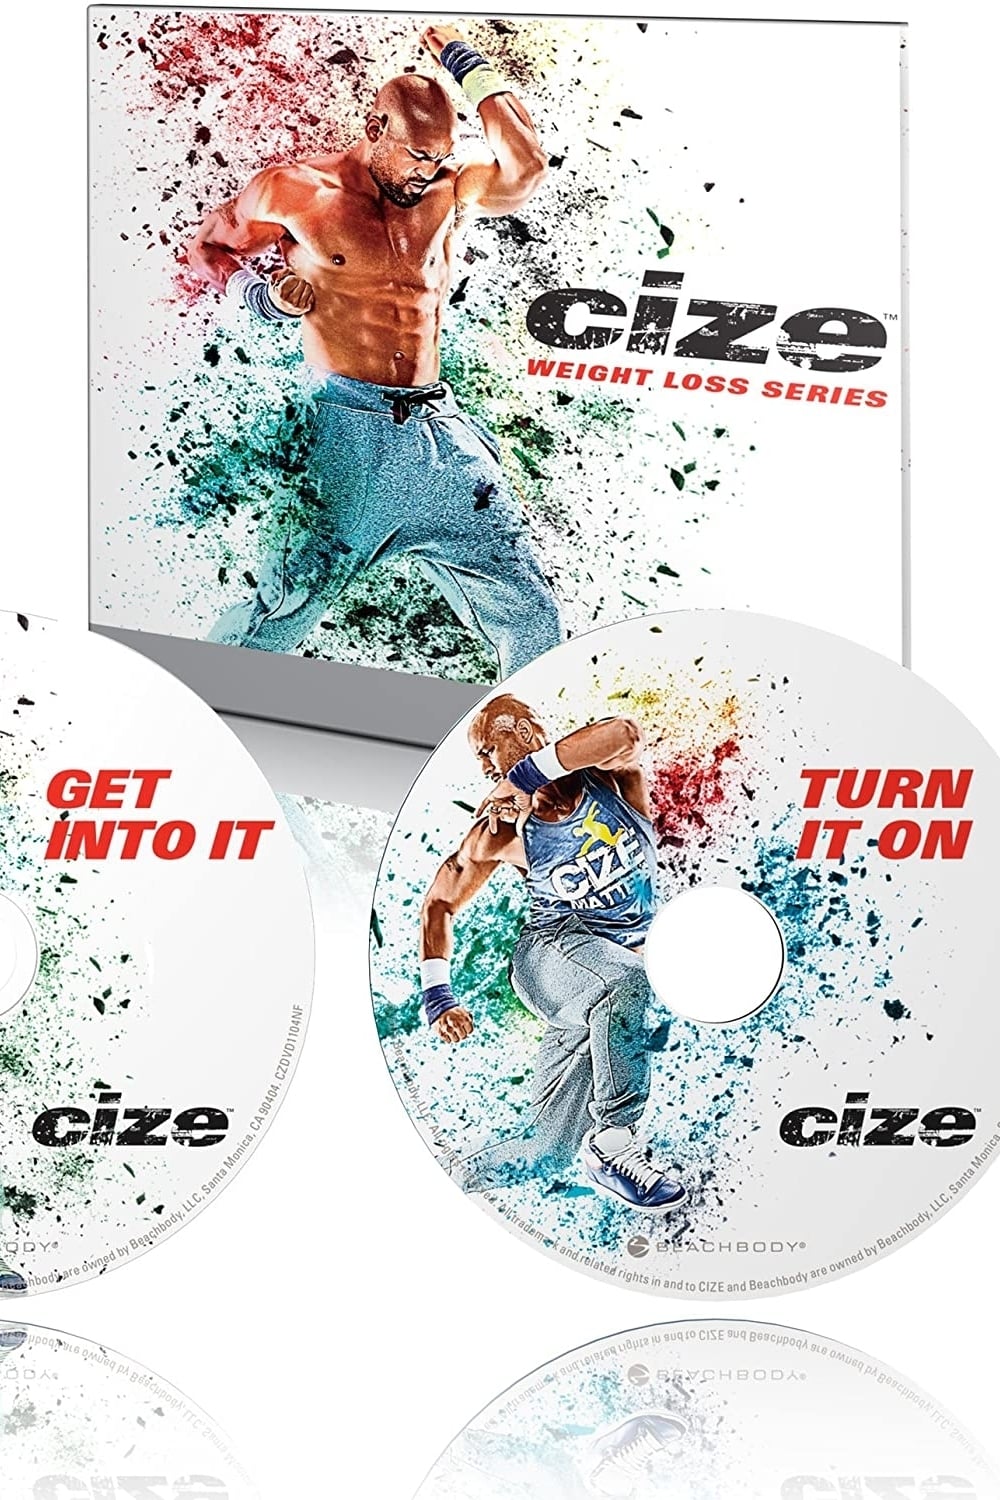 Cize - Turn It On